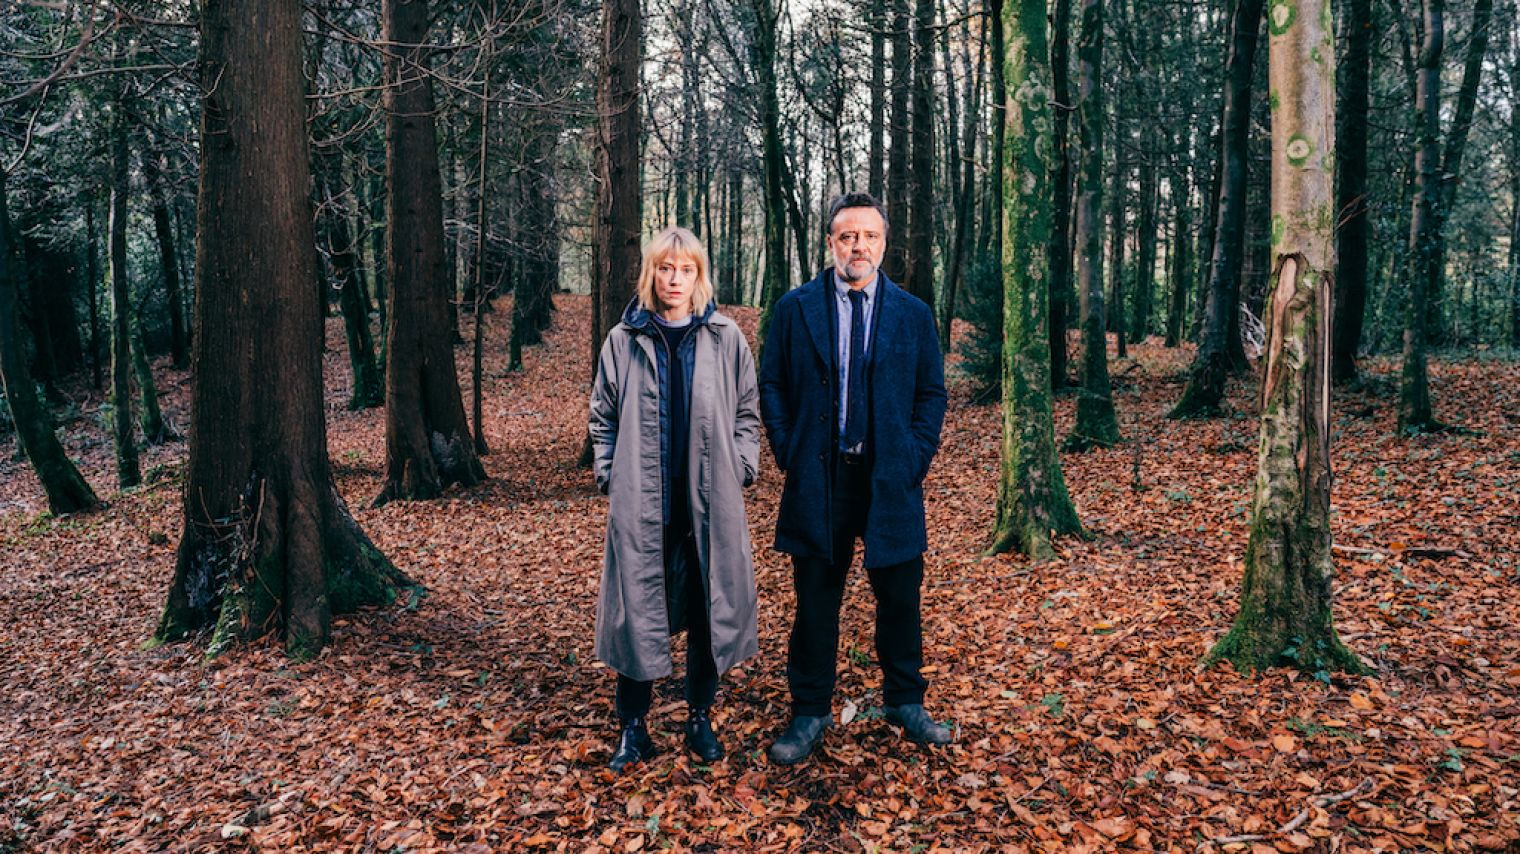 Elen Rhys and Richard Harrington to co-lead new Welsh crime drama series ’The One That Got Away’